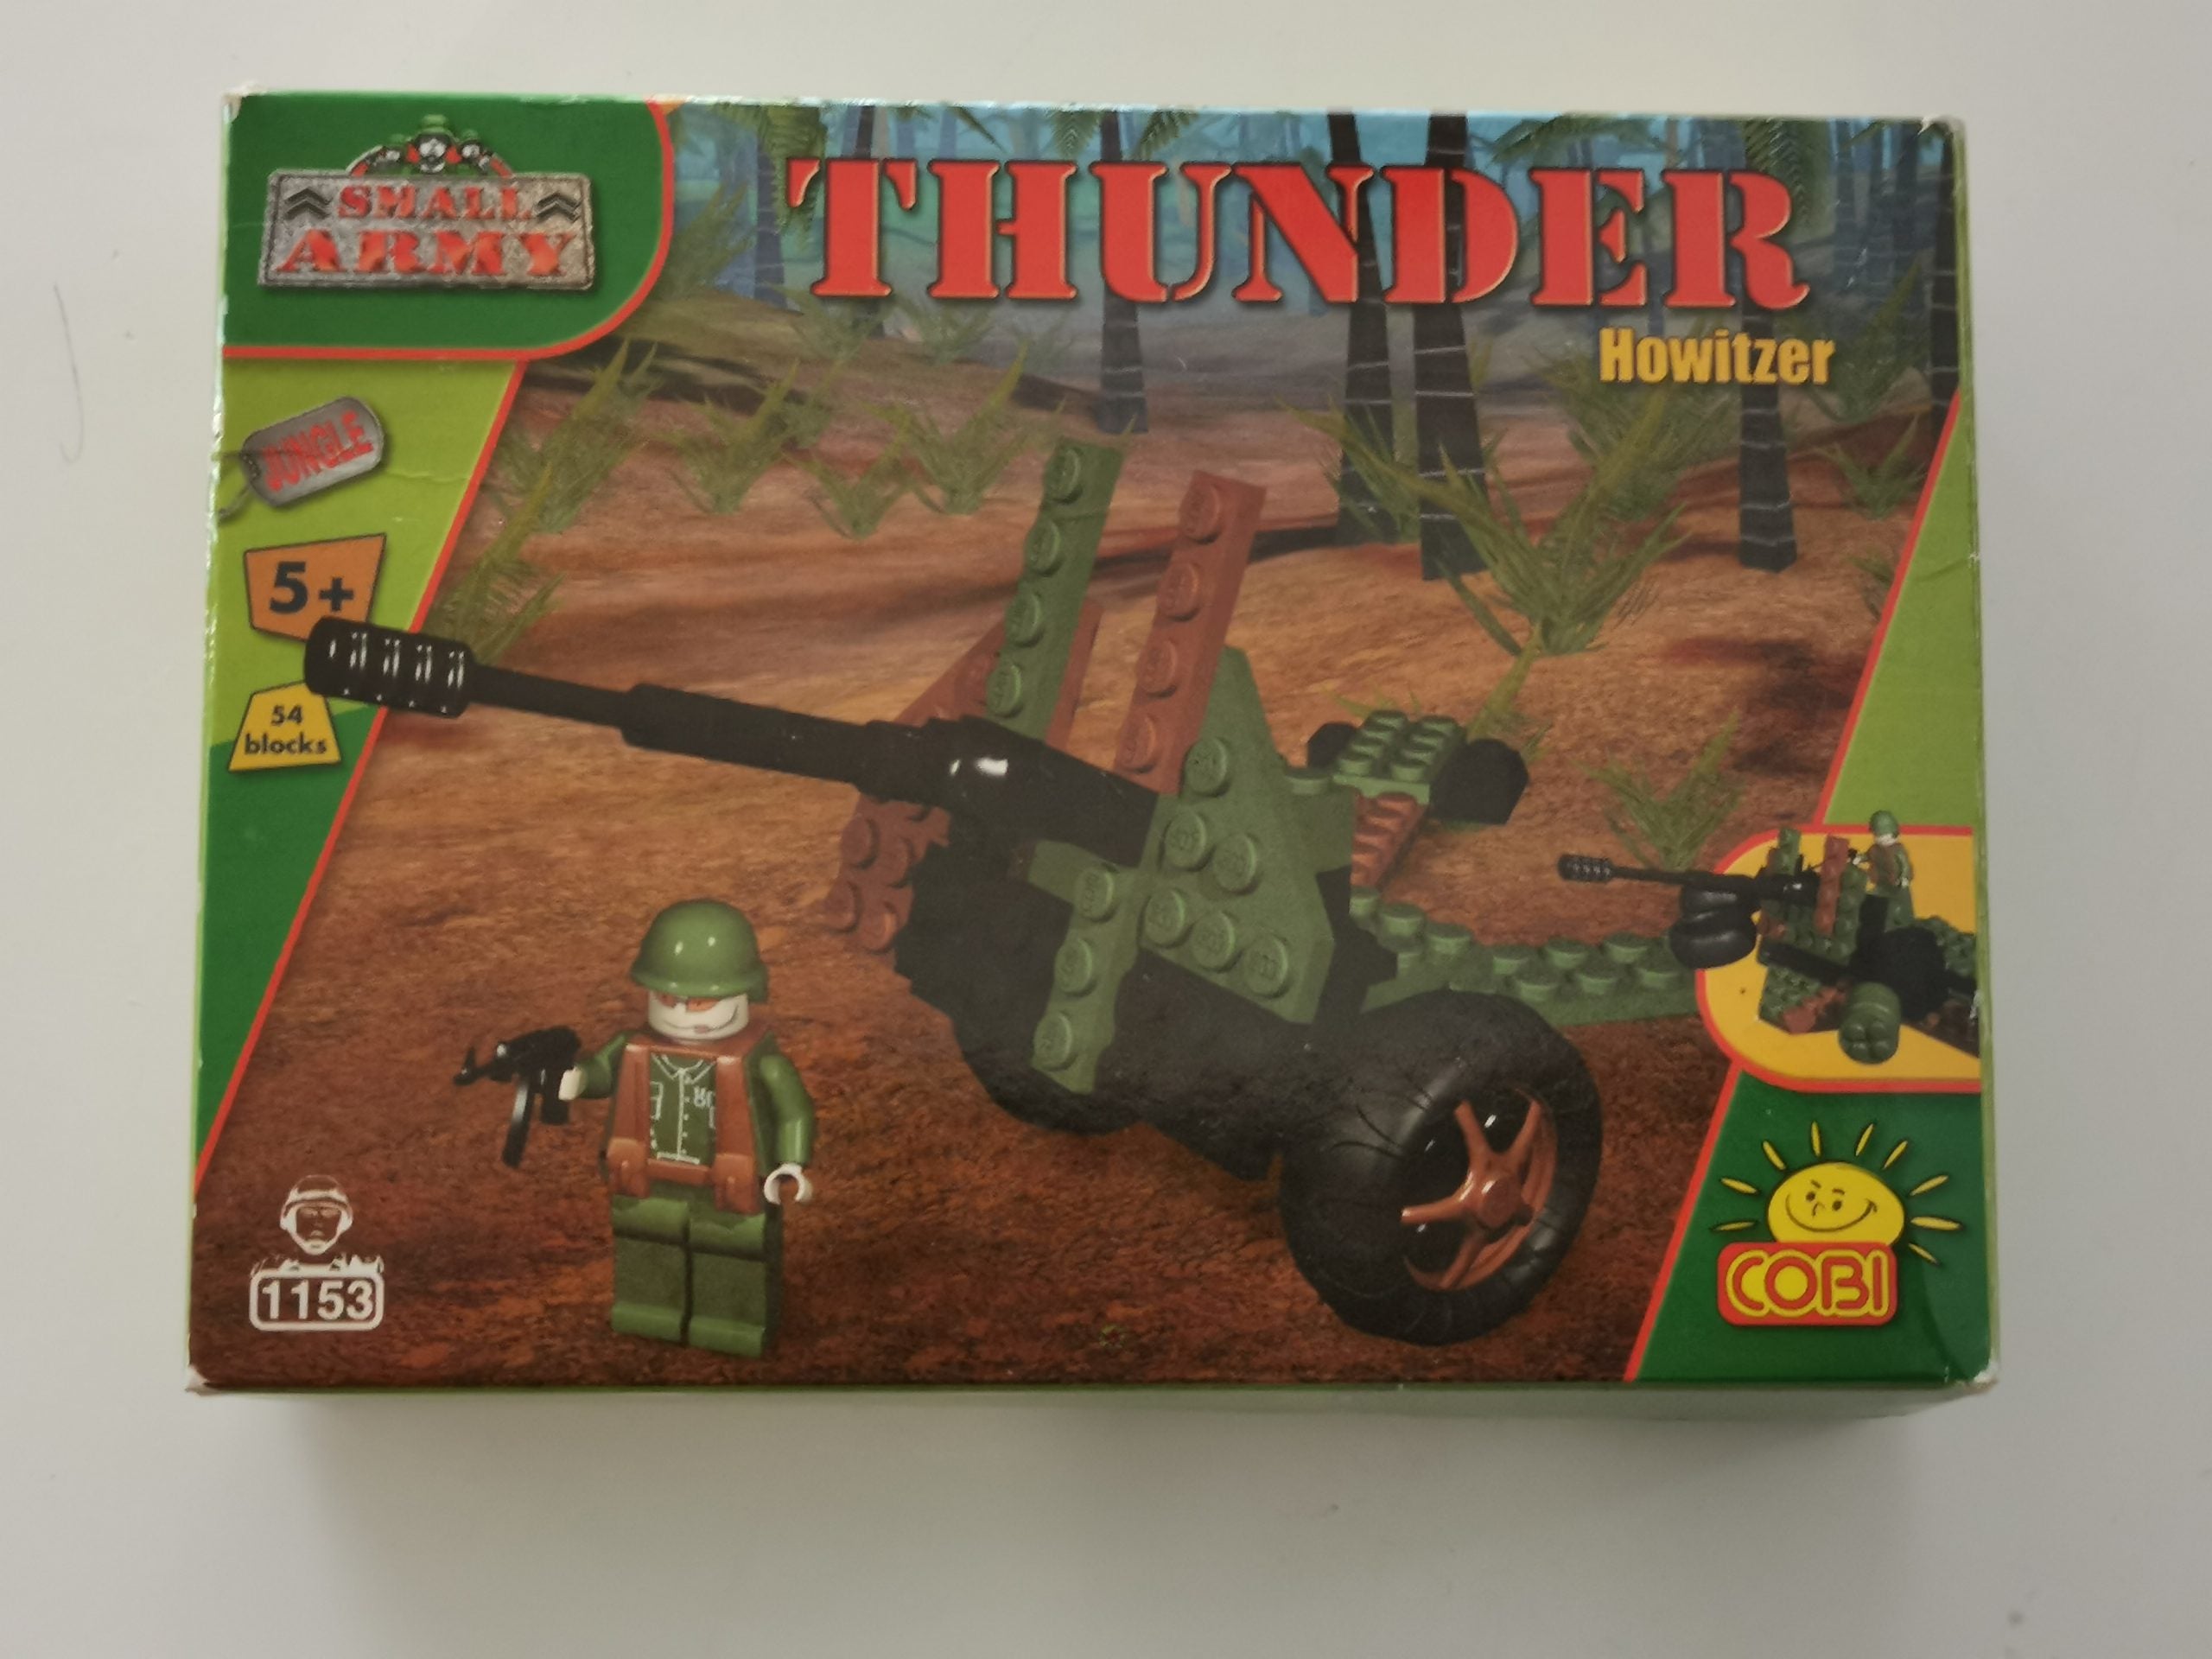 Cobi 1153 Thunder Howitzer gebraucht